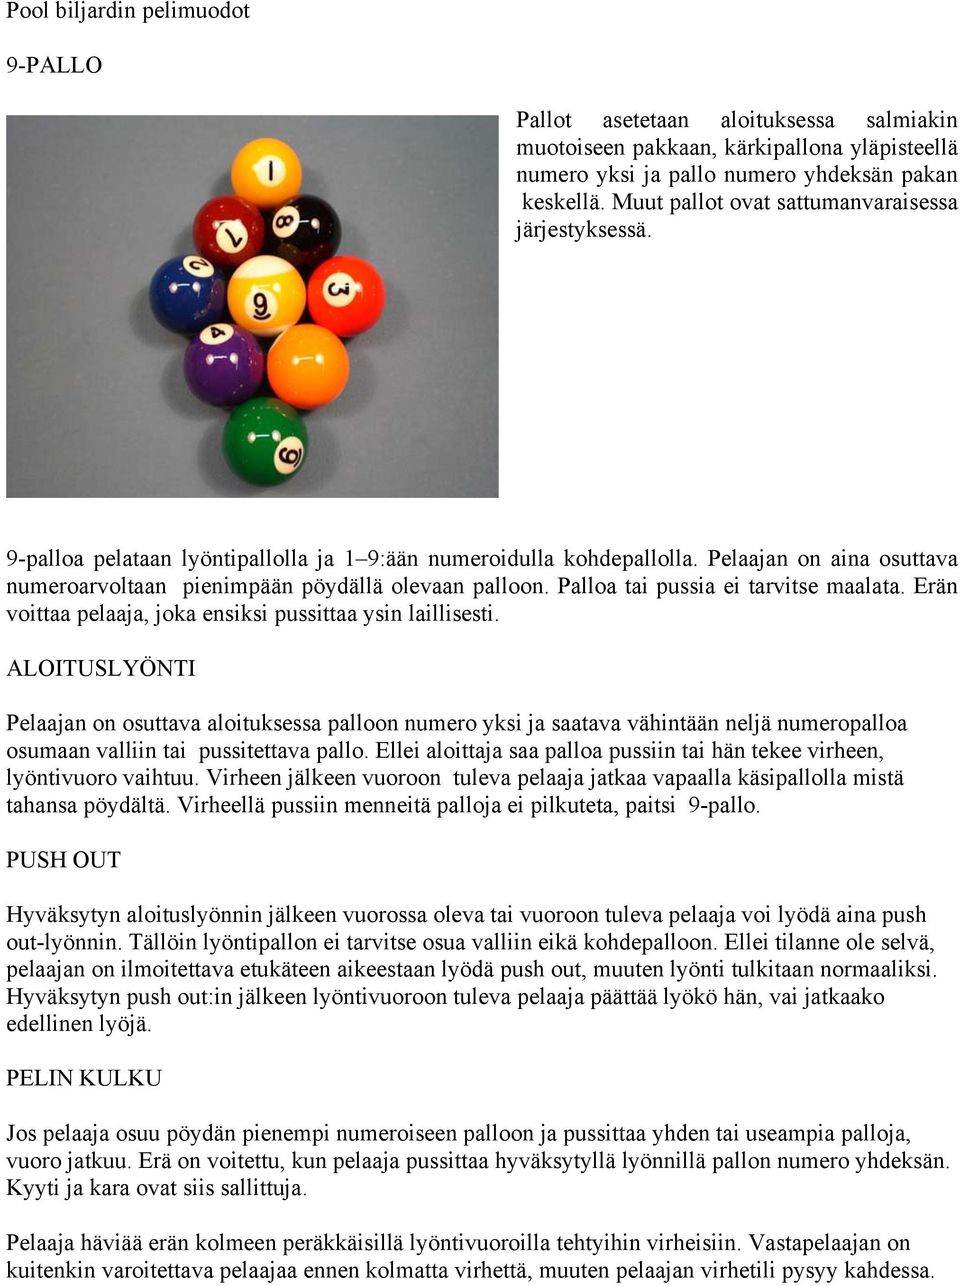 BILJARDIN ABC Suomen Biljardiliitto ry Marko Muukka - PDF Free Download